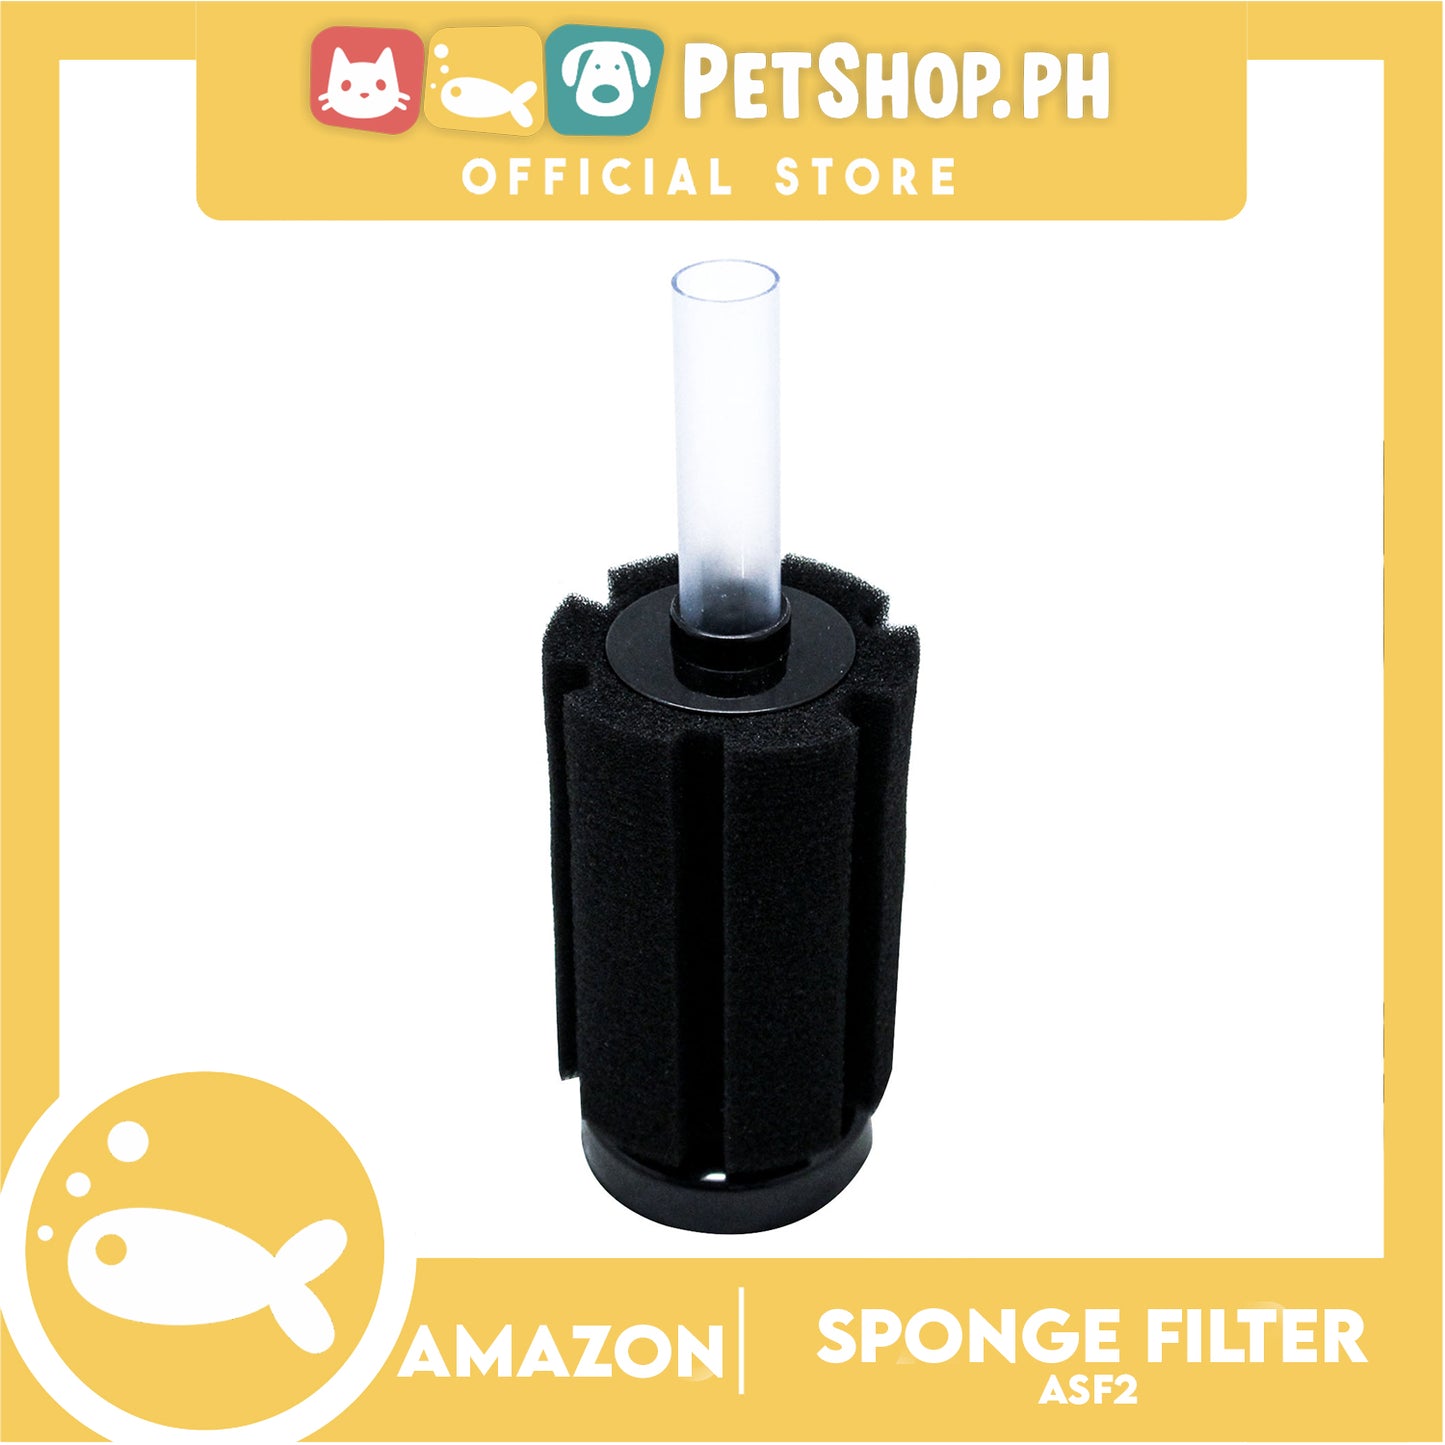 ASF2 Bio Sponge Filter